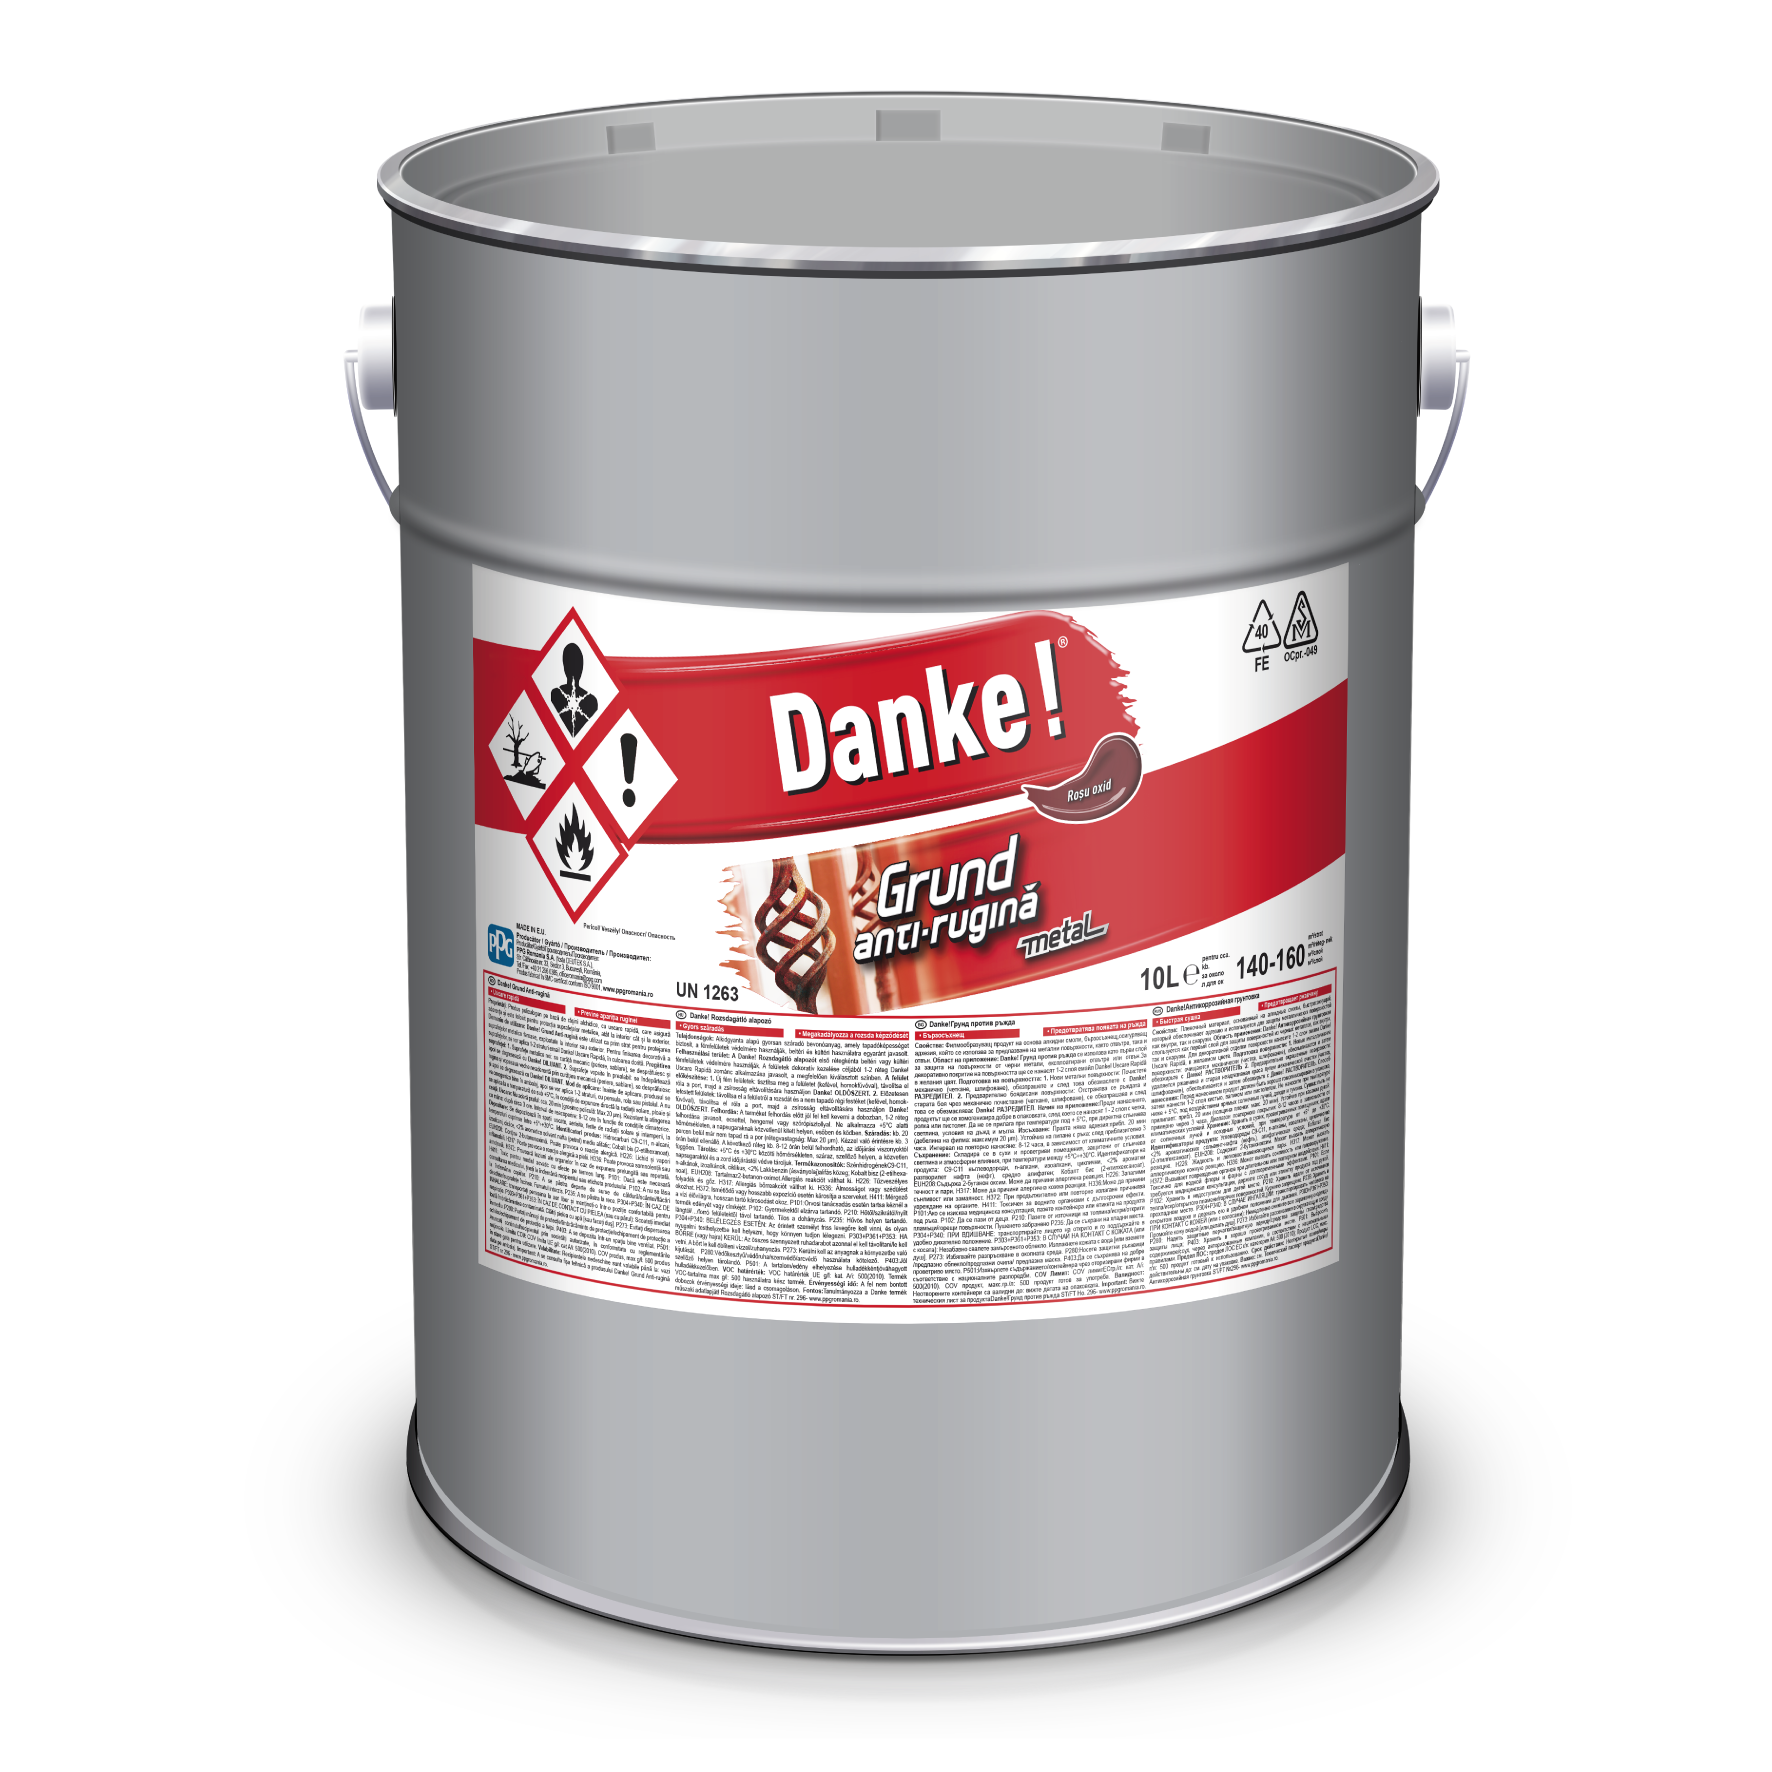 Grund metal anti-rugina Danke, interior/exterior, rosu oxid,10 L anti-rugina